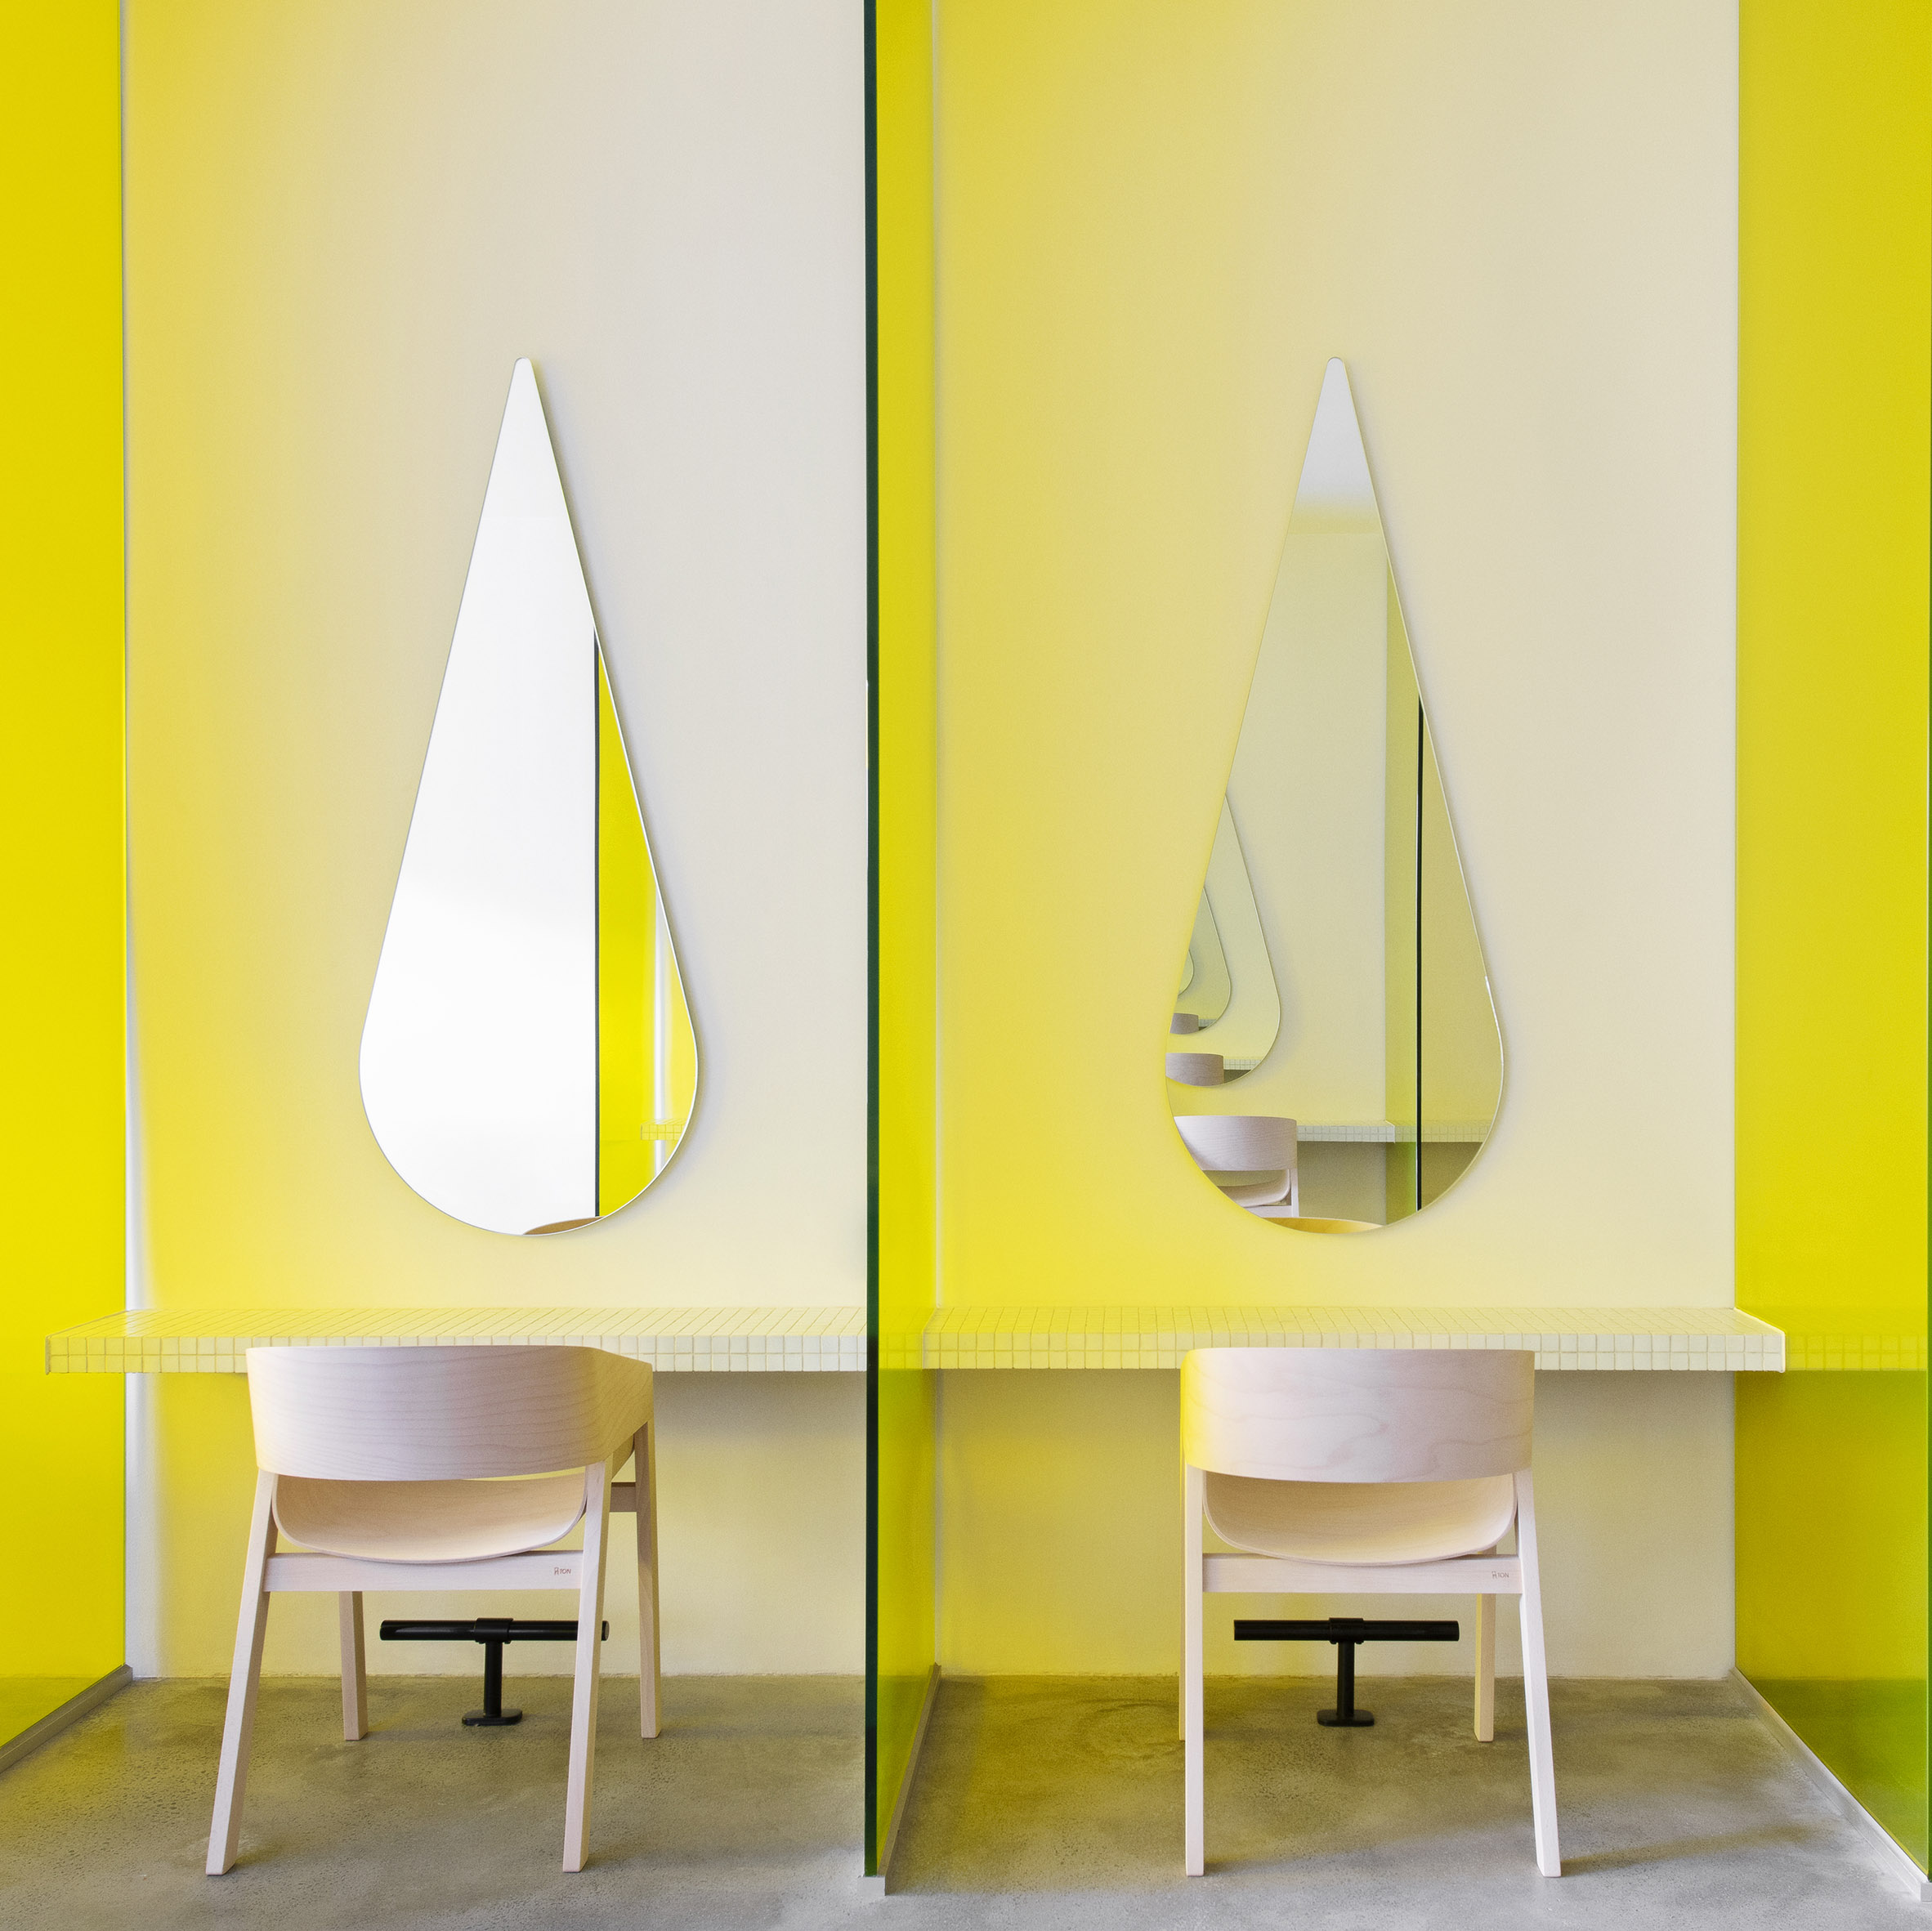 Danielle Brustman creates yellow highlights in sunny Melbourne hair salon